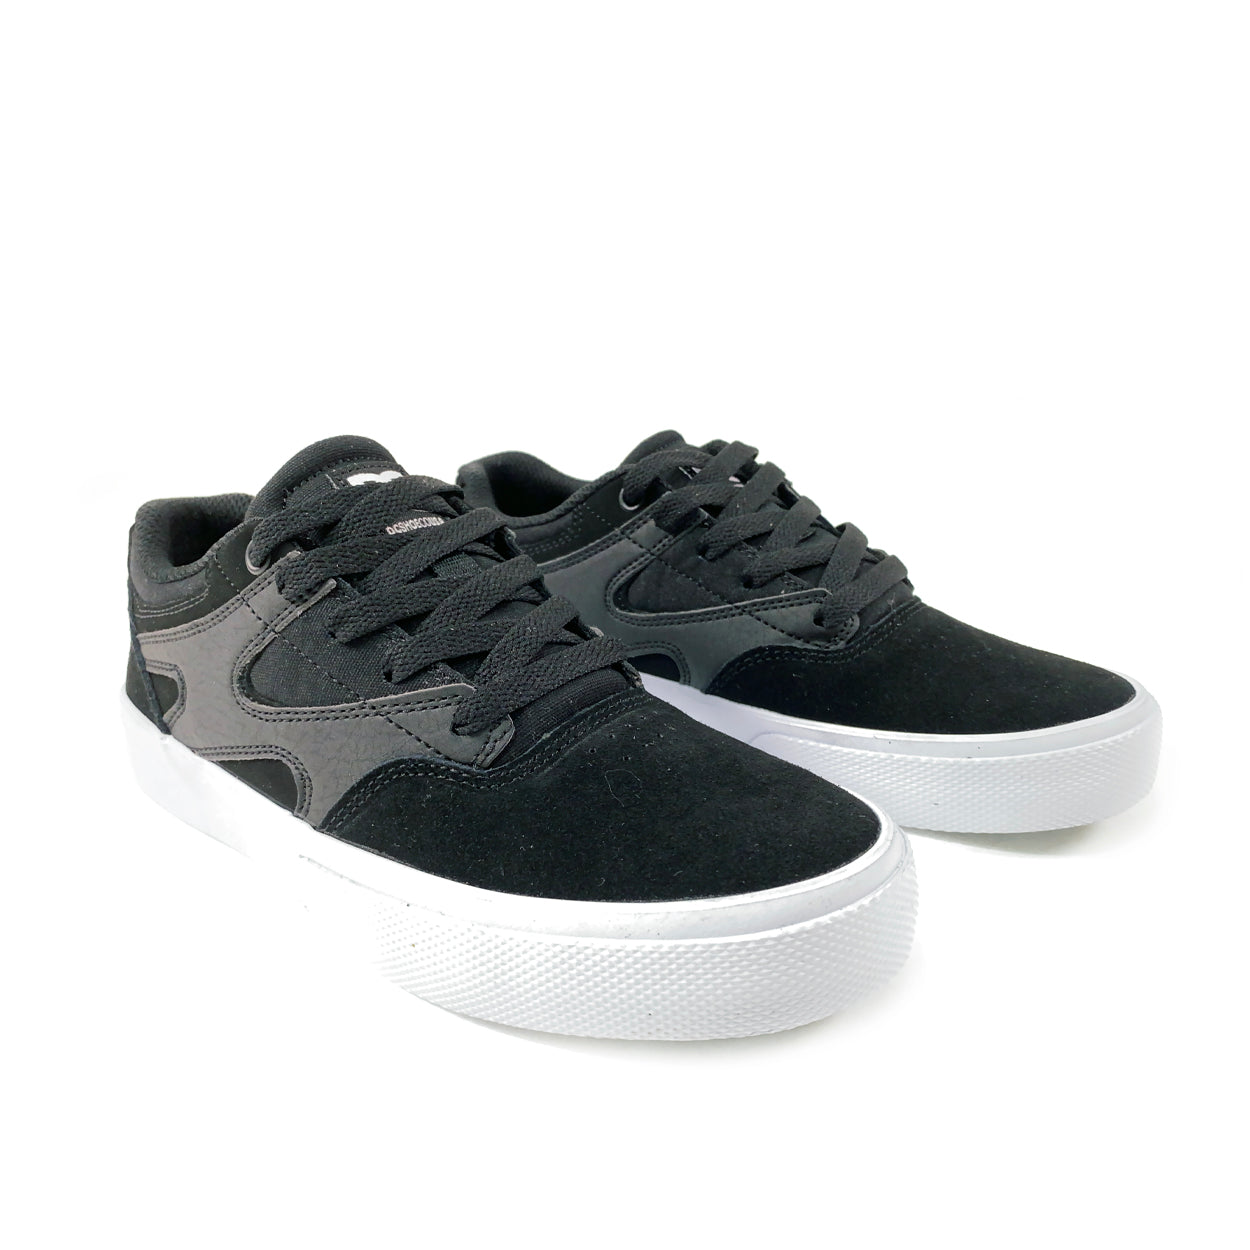 DC Shoes Kids Kalis Vulc Skate Shoes - Black / Black / White - Prime Delux Store